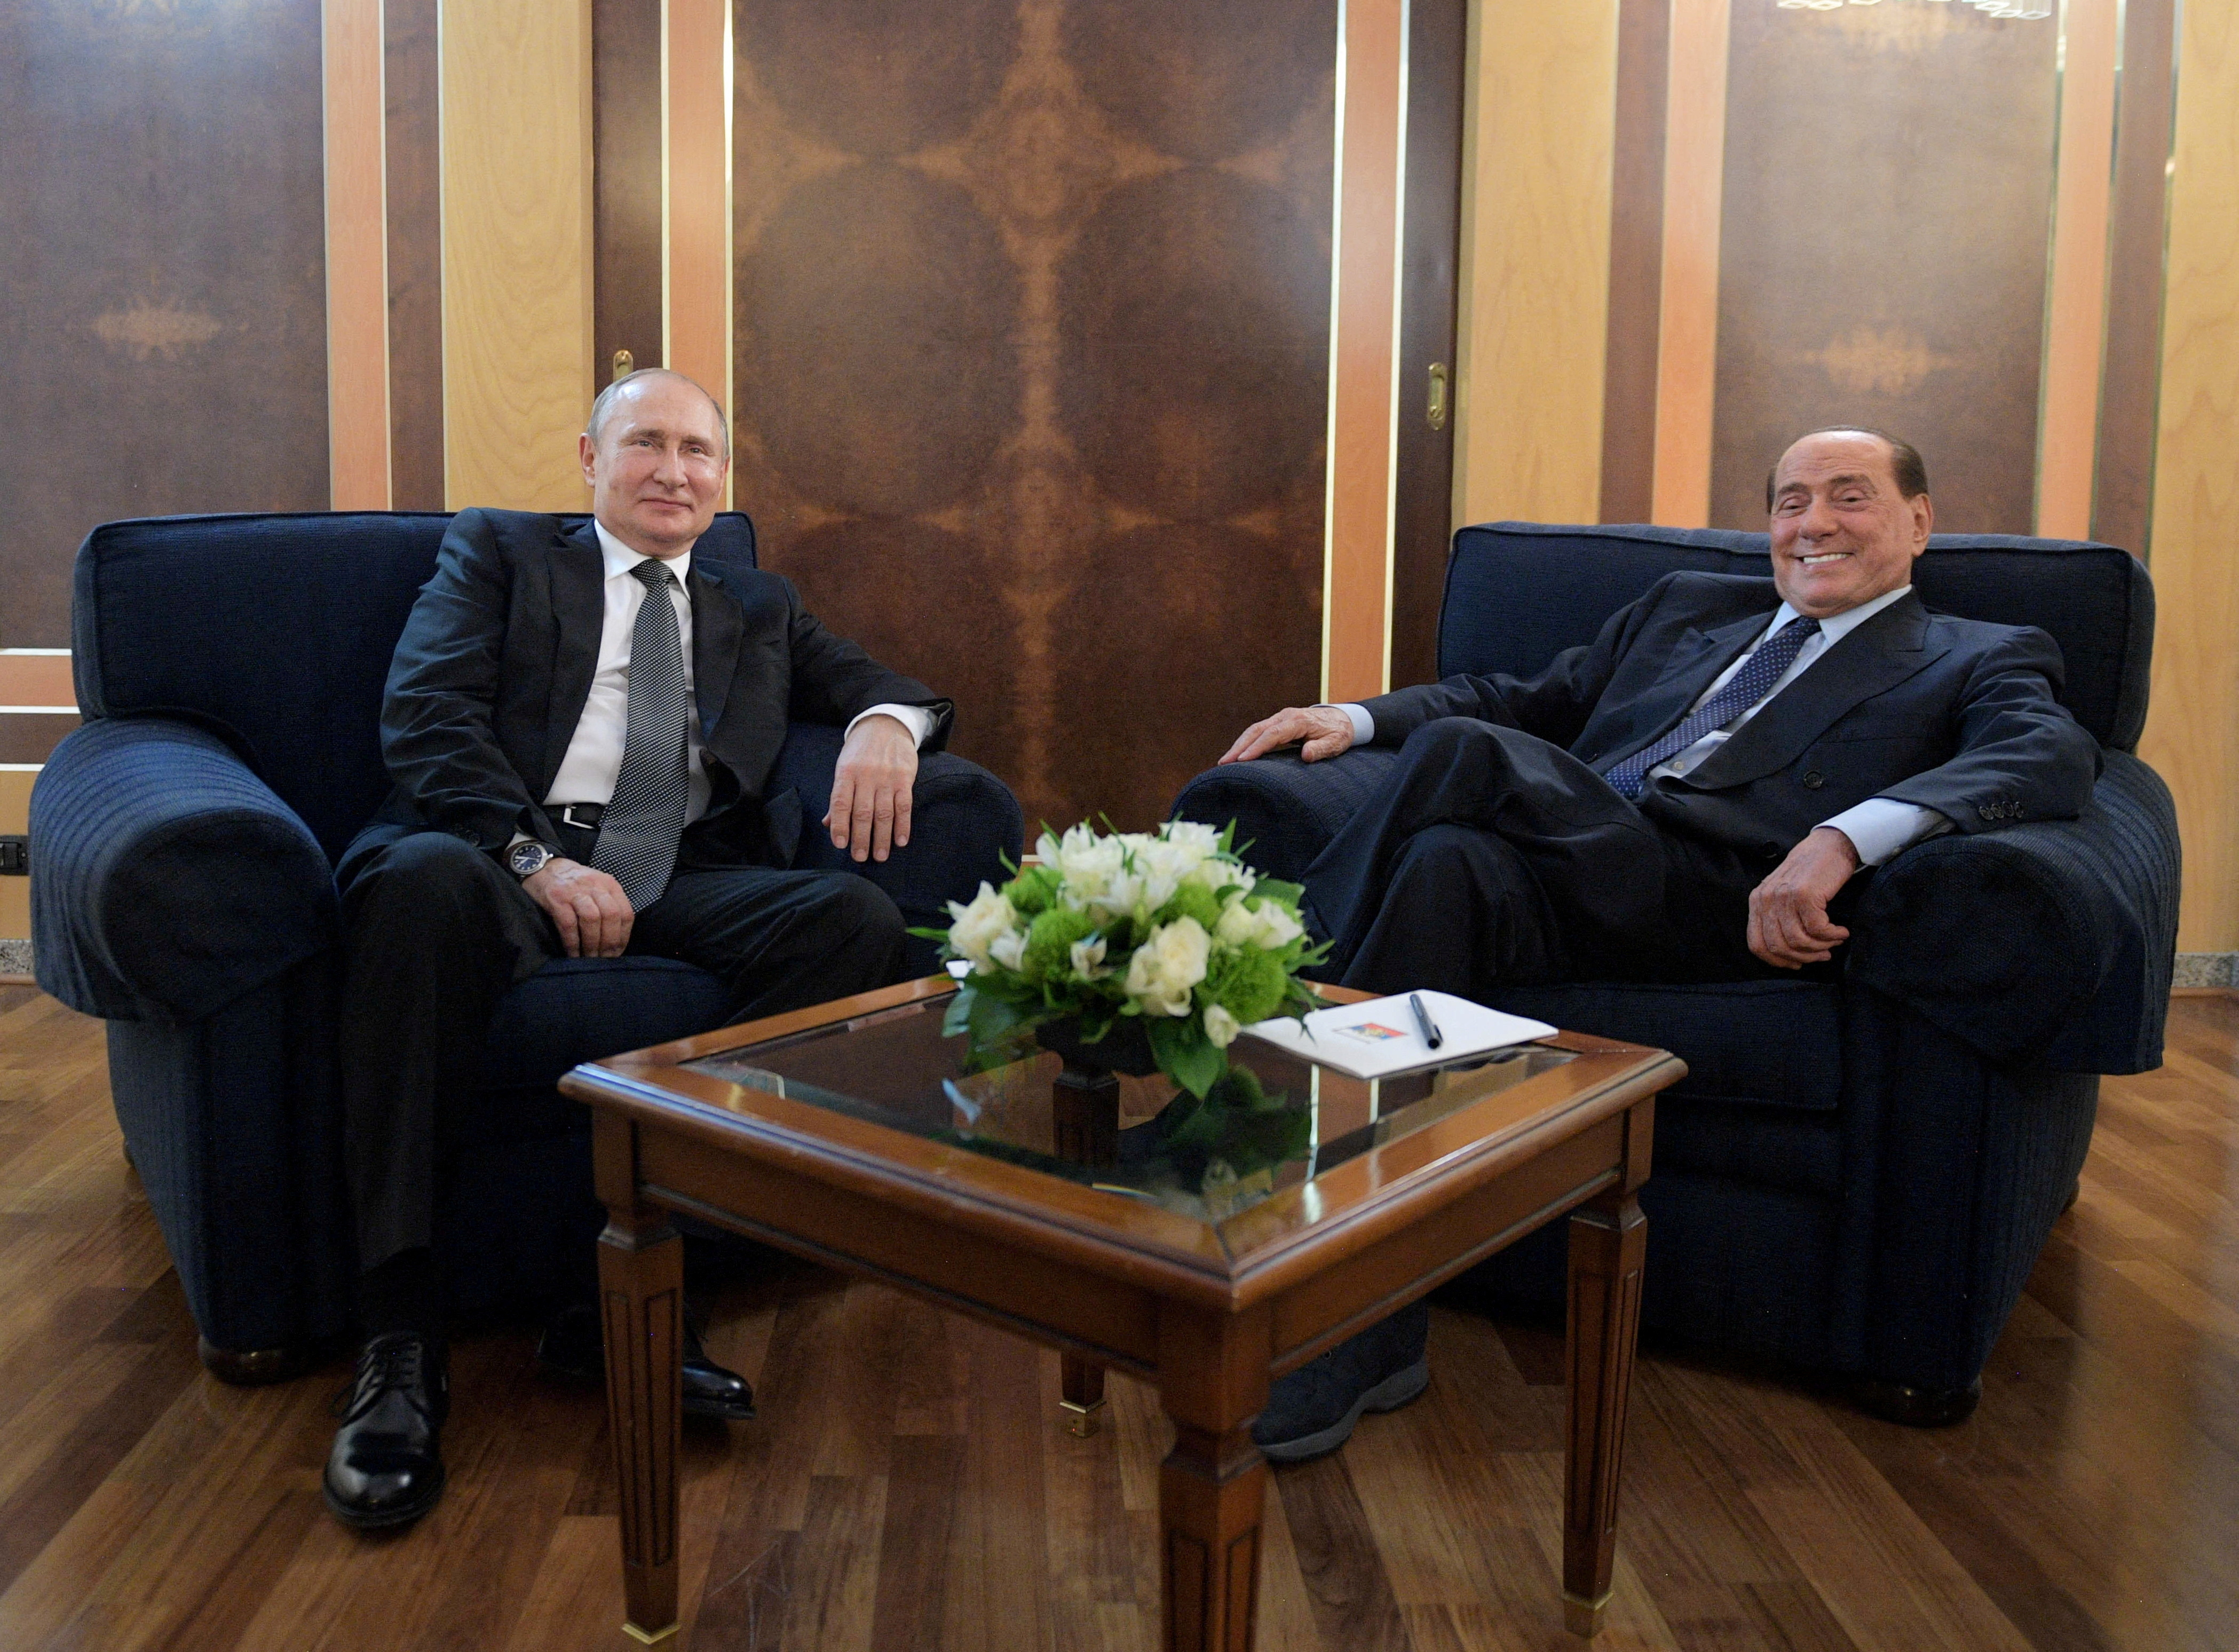 Russian President Putin meets with Italian Member of the European Parliament Berlusconi in Rome